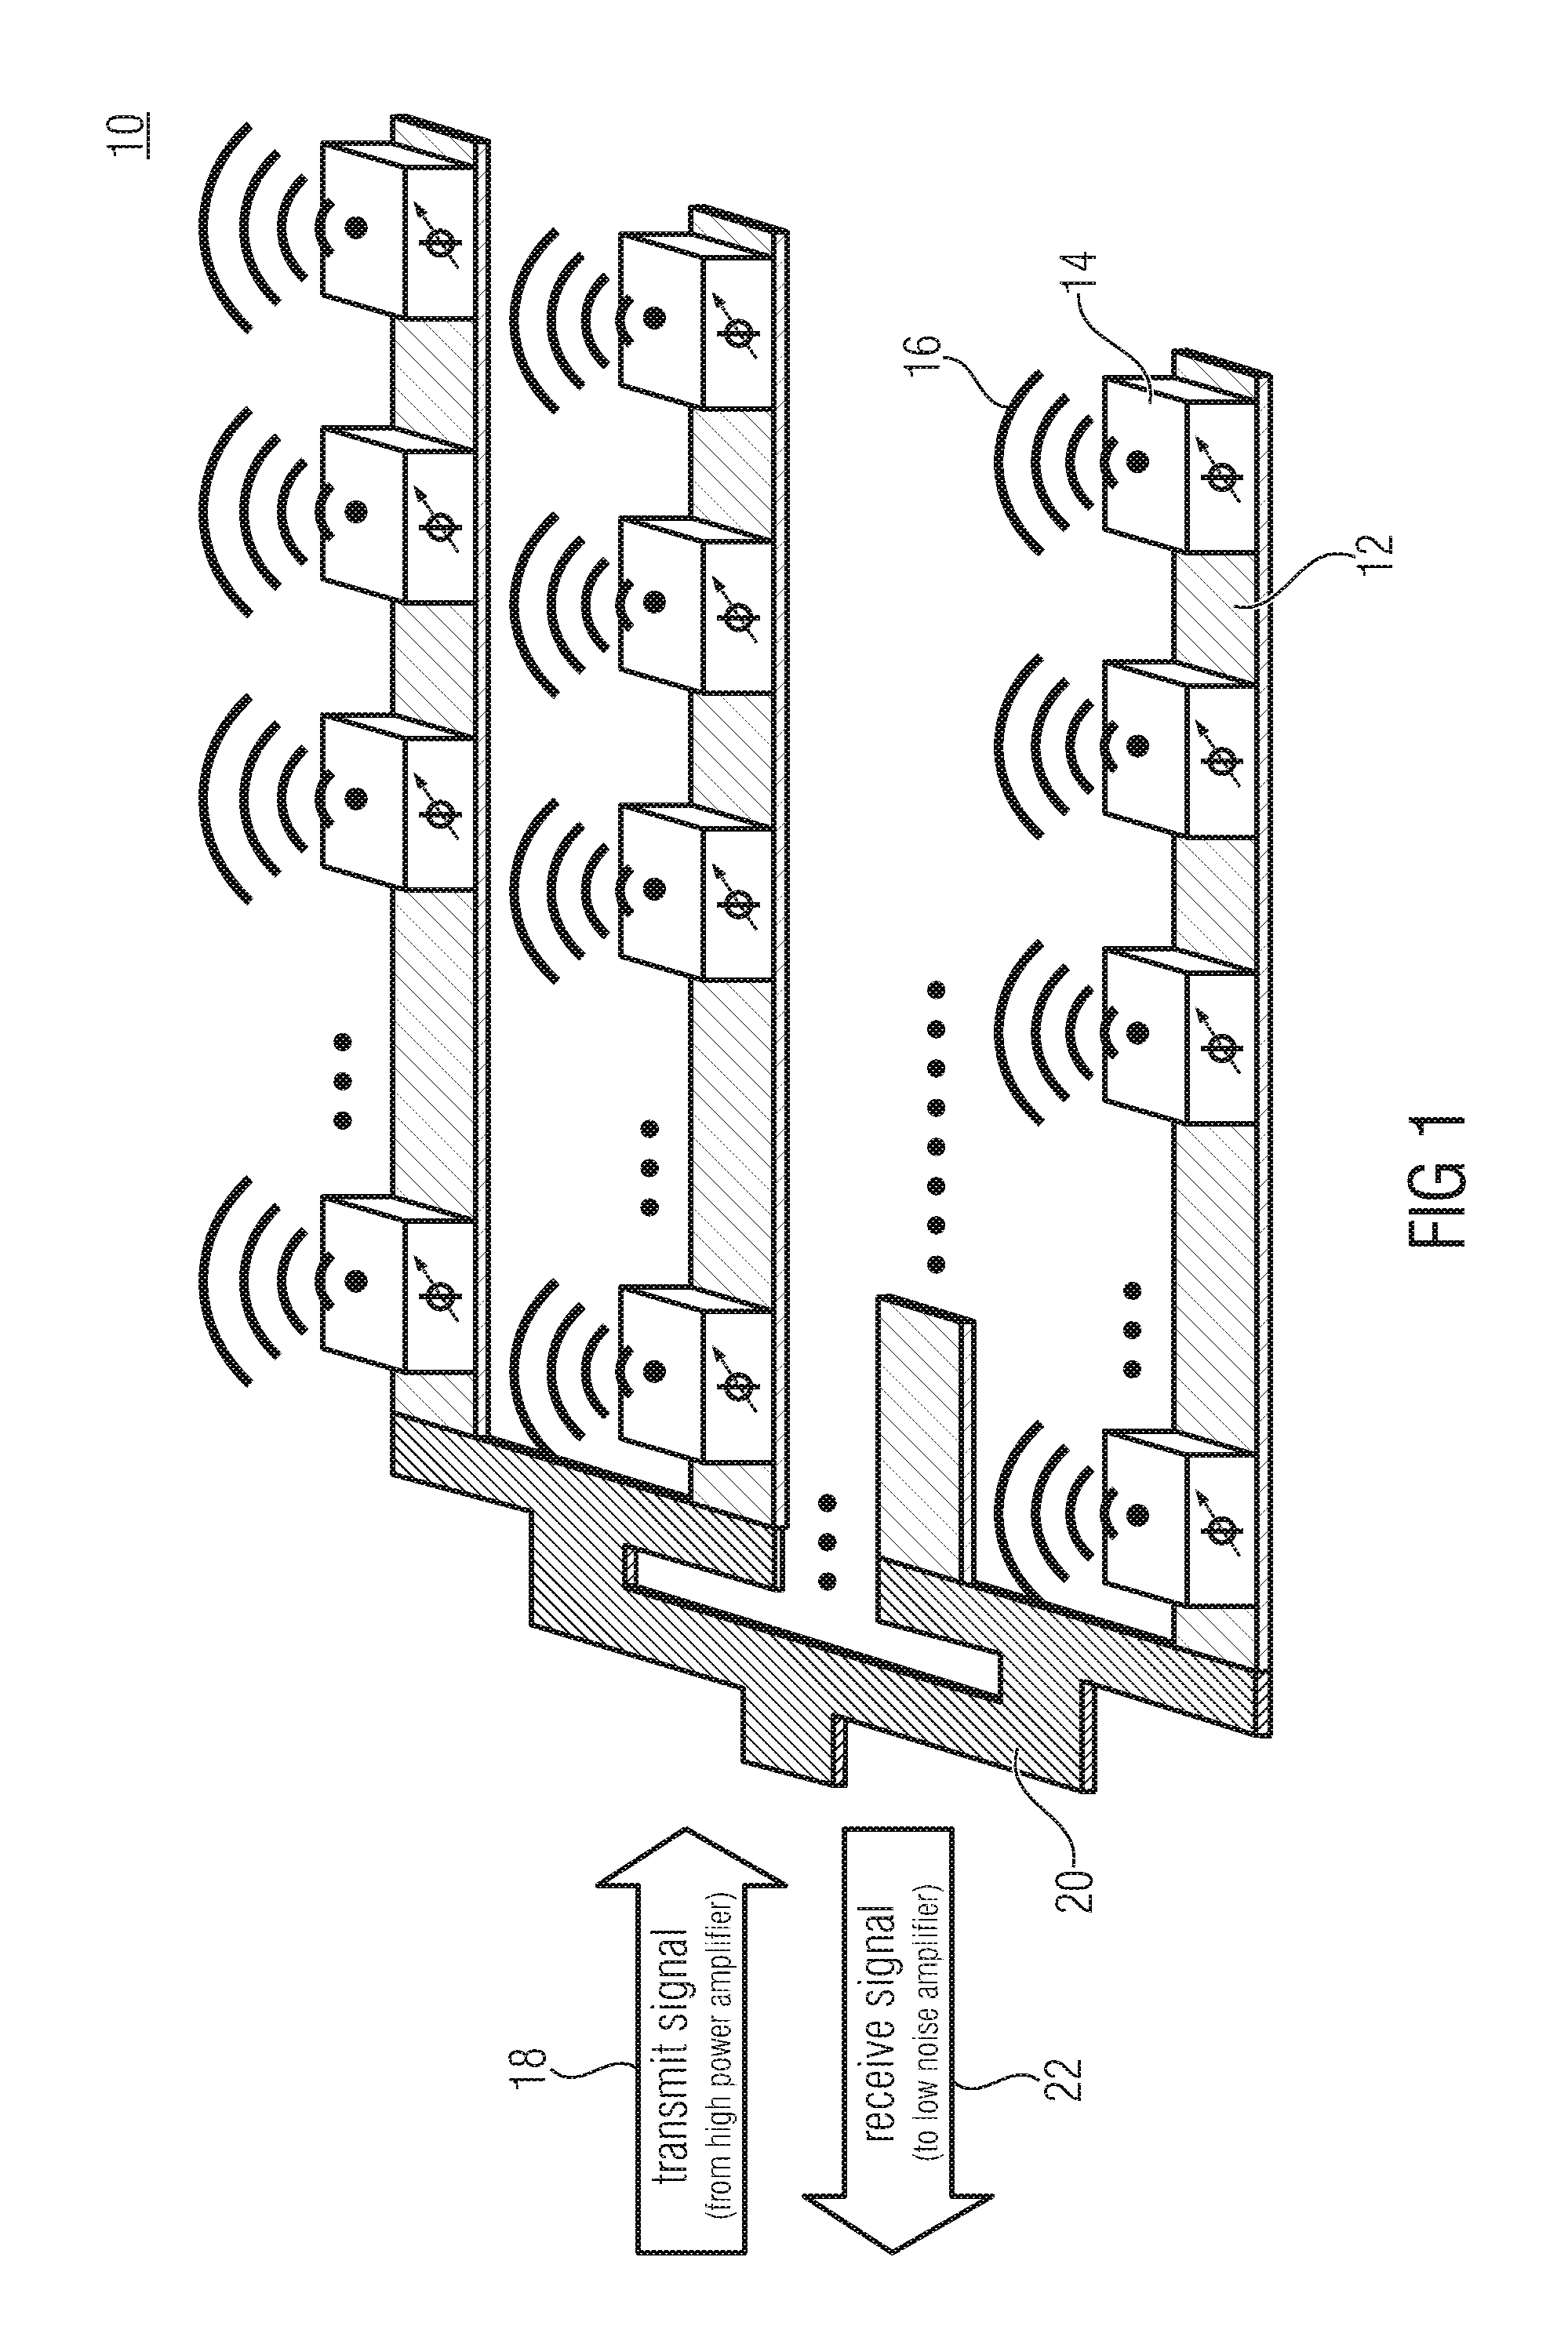 Phased array antenna